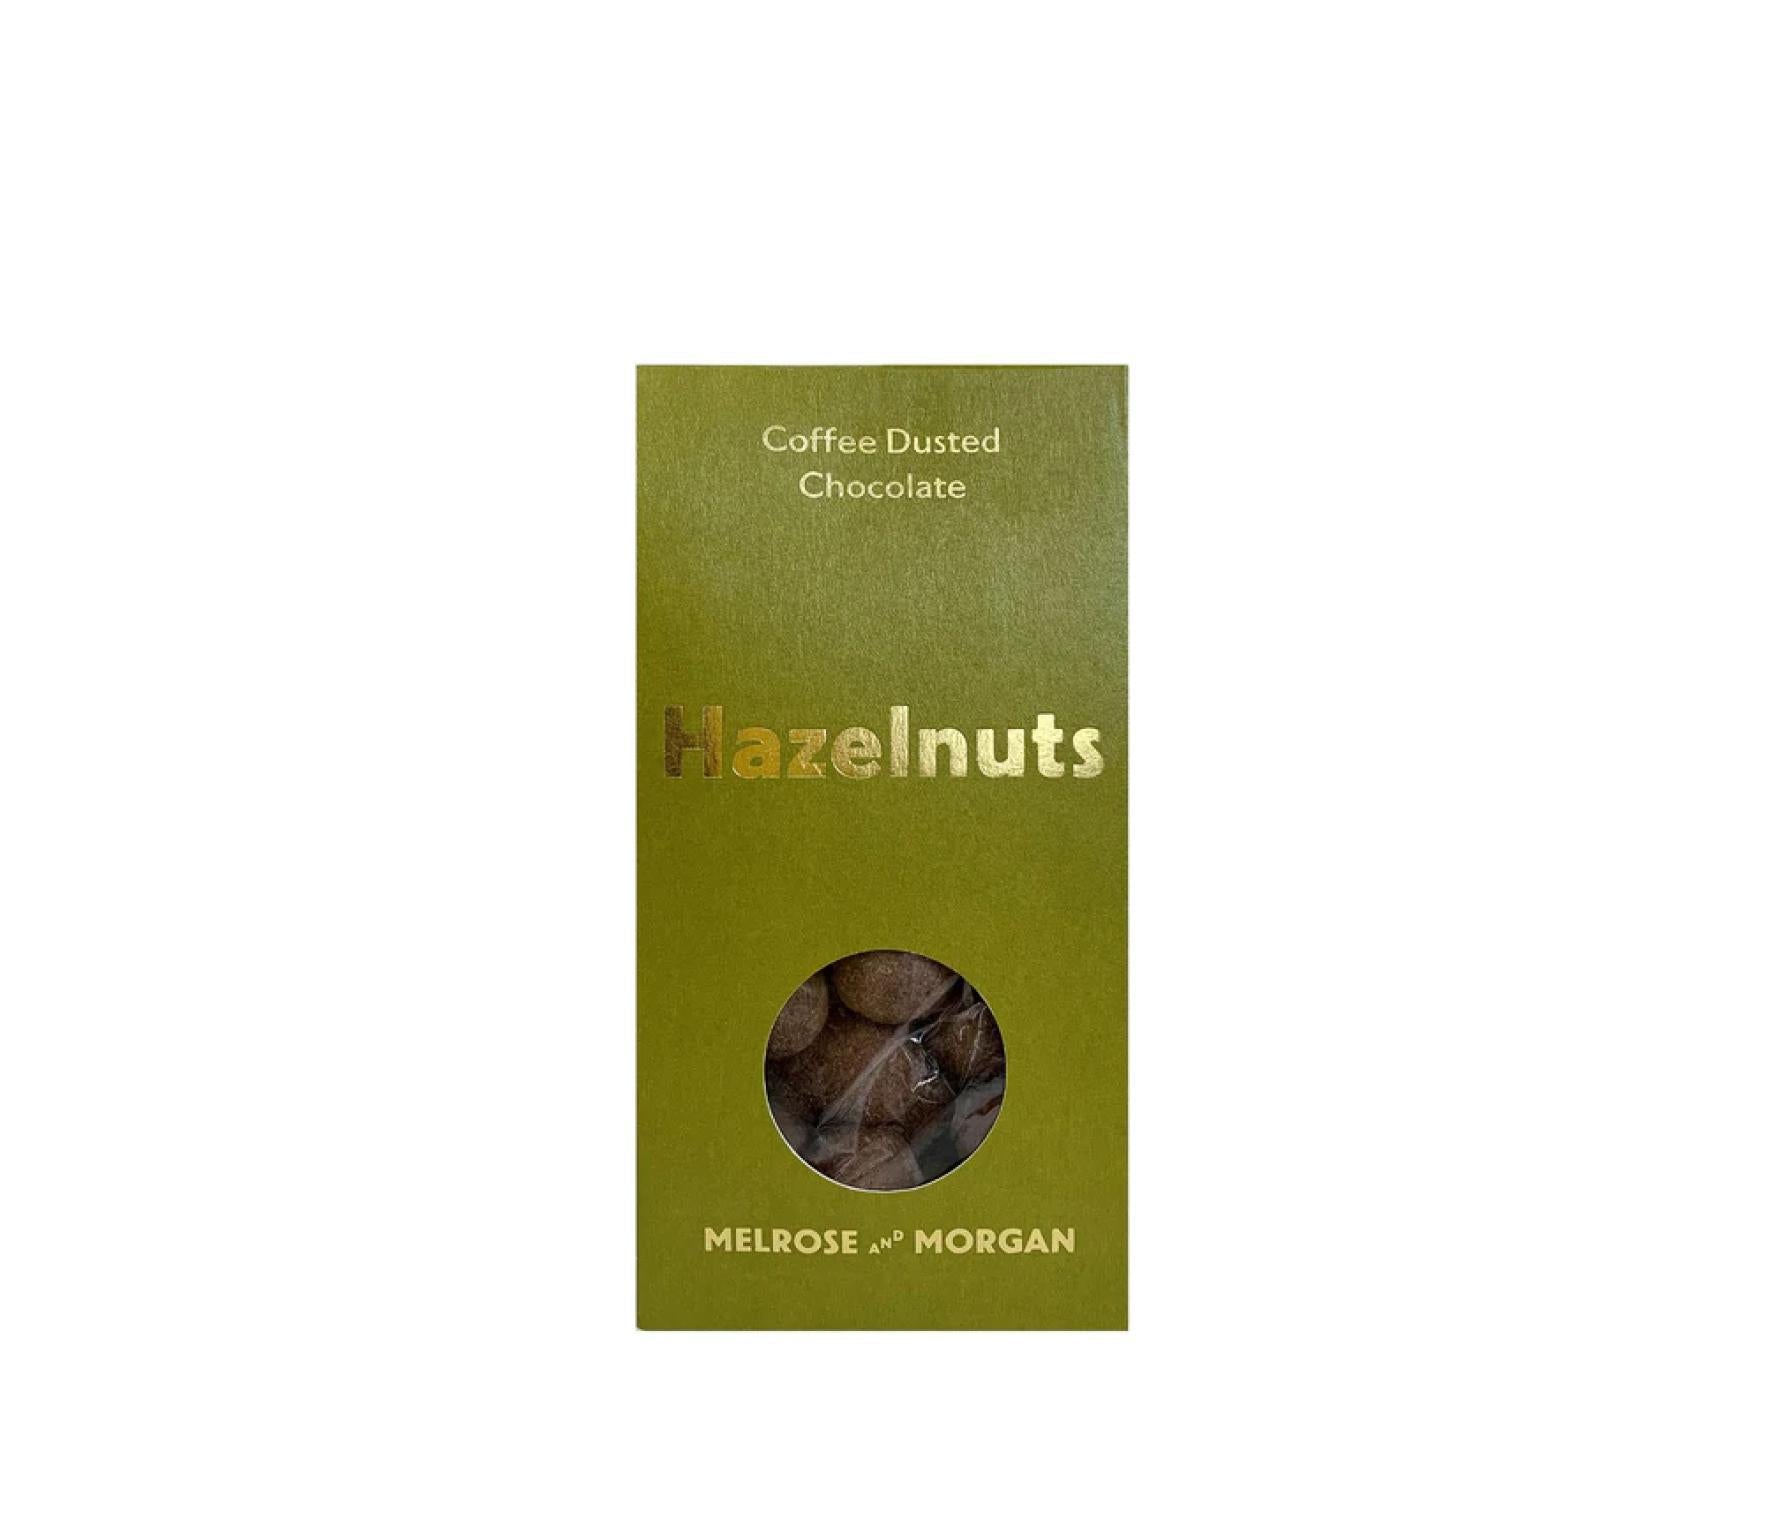 Melrose & Morgan - Coffee Dusted Hazelnuts